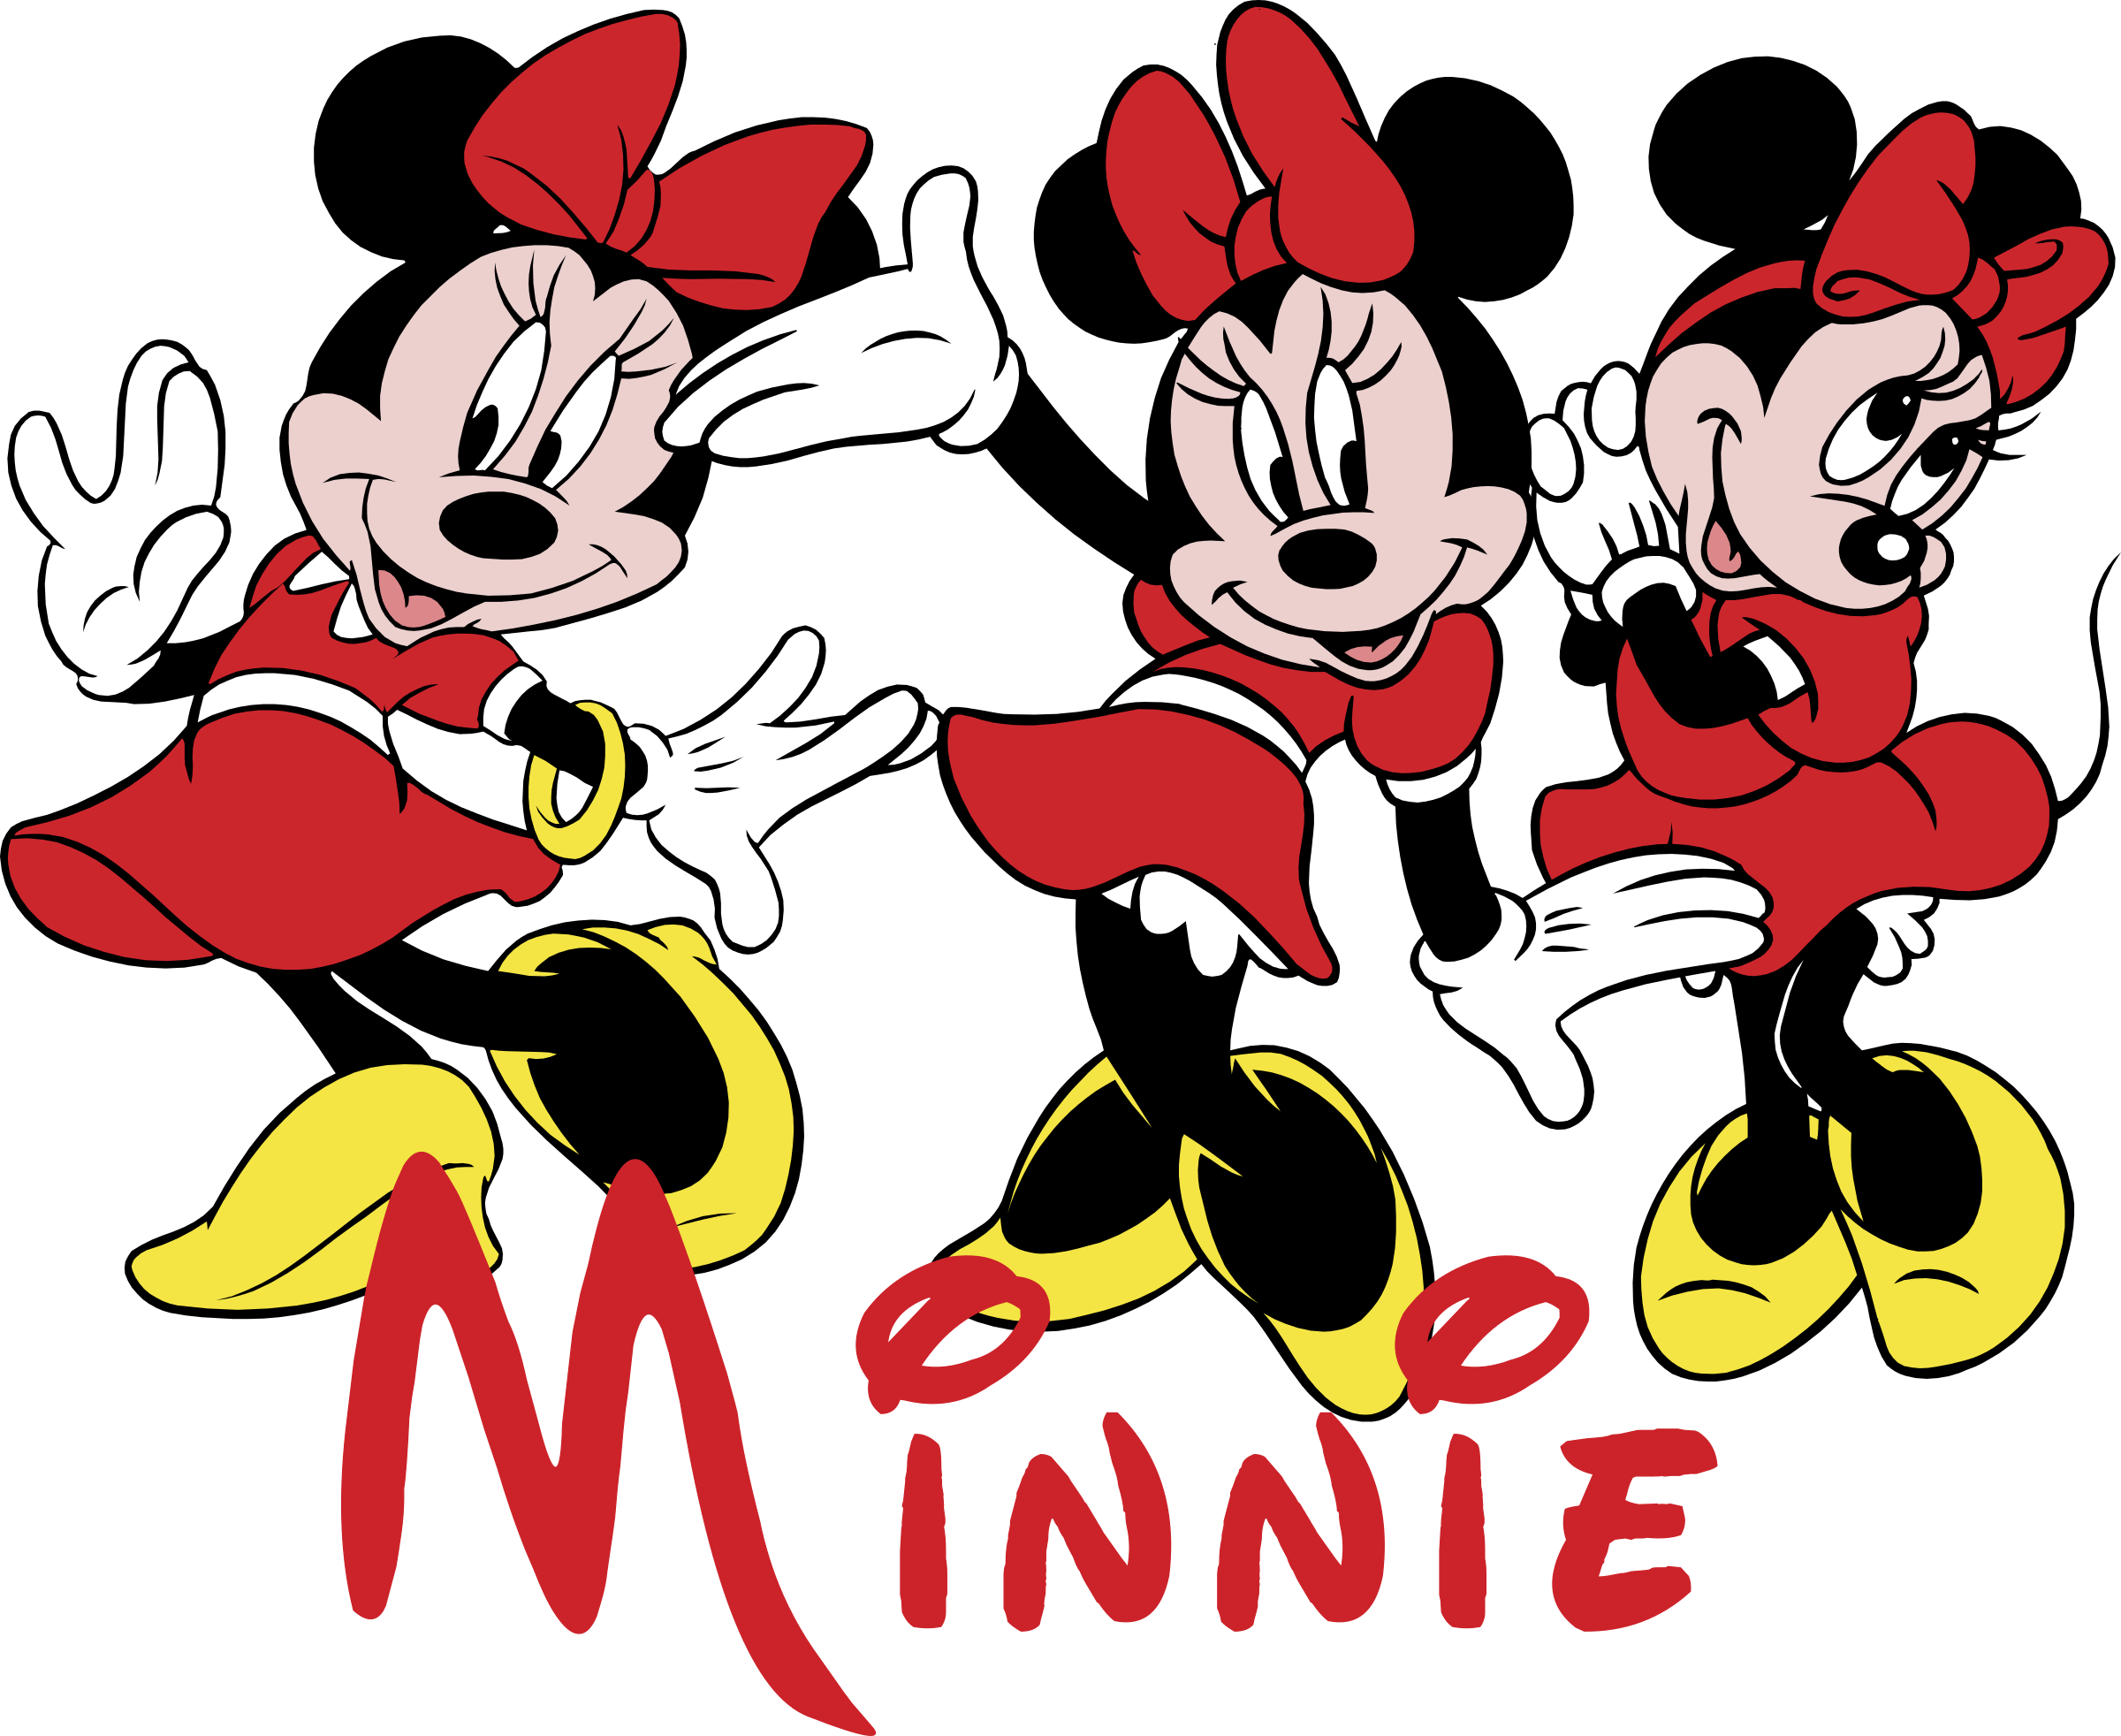 Minnie Logo - Minnie Logo PNG Transparent & SVG Vector - Freebie Supply